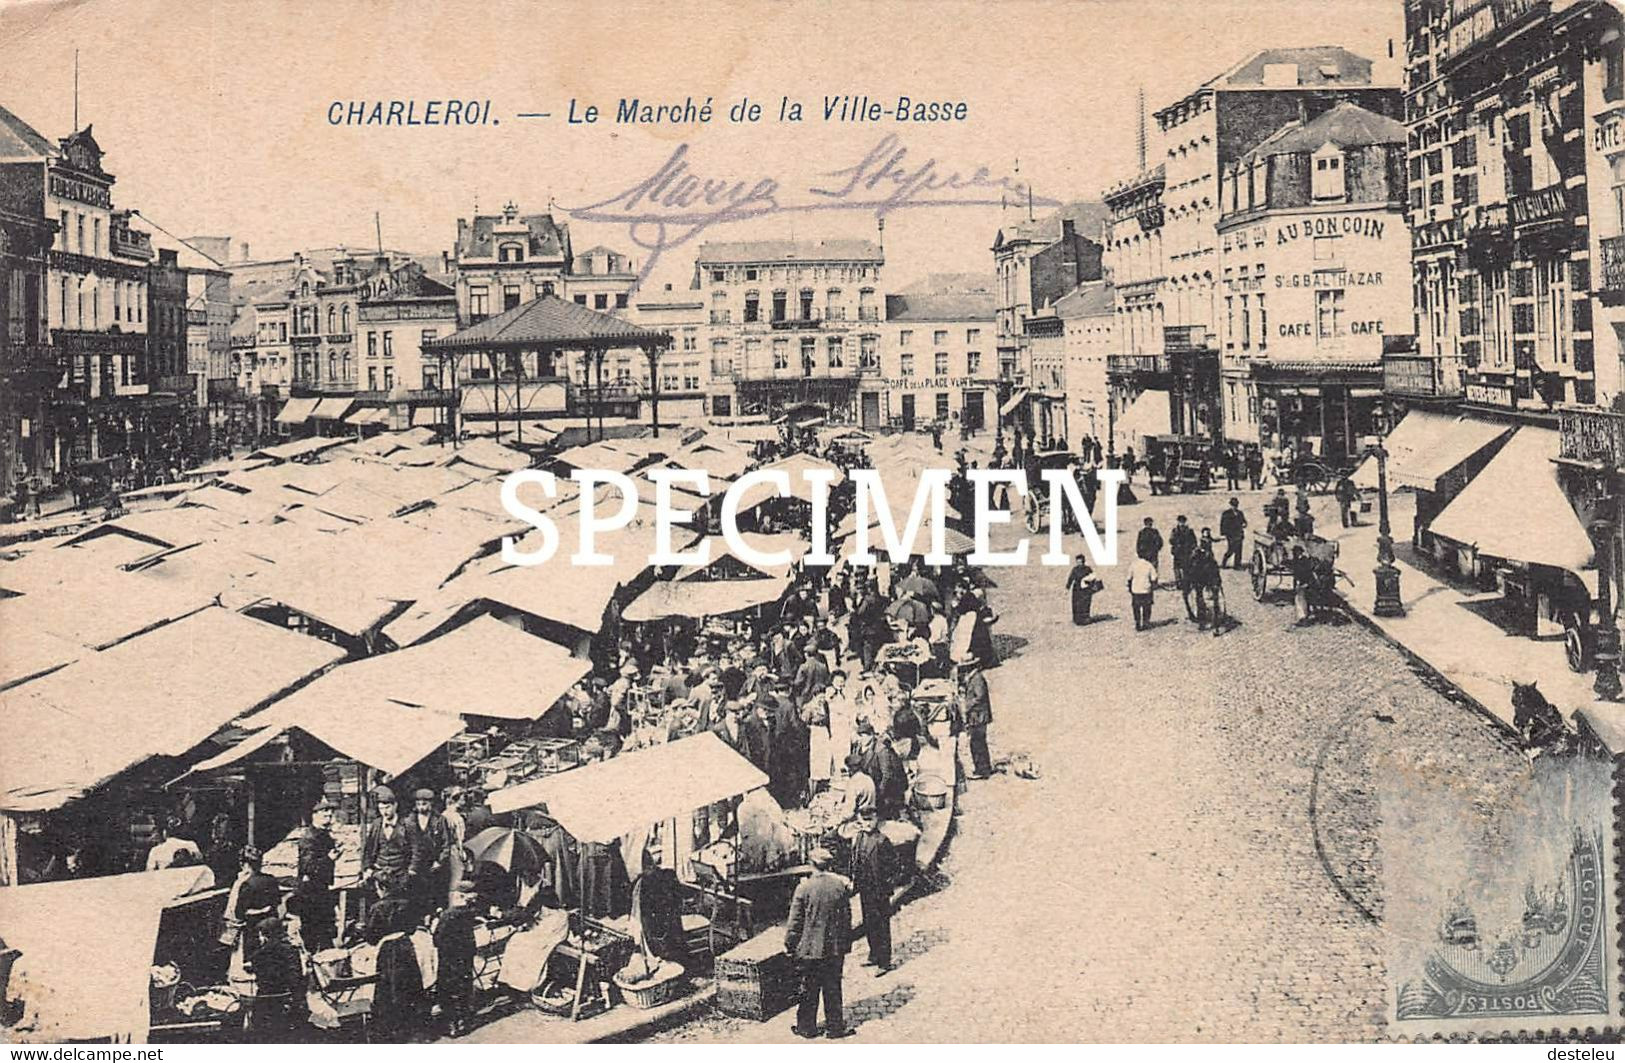 Le Marché De La Ville-Basse - Charleroi - Charleroi